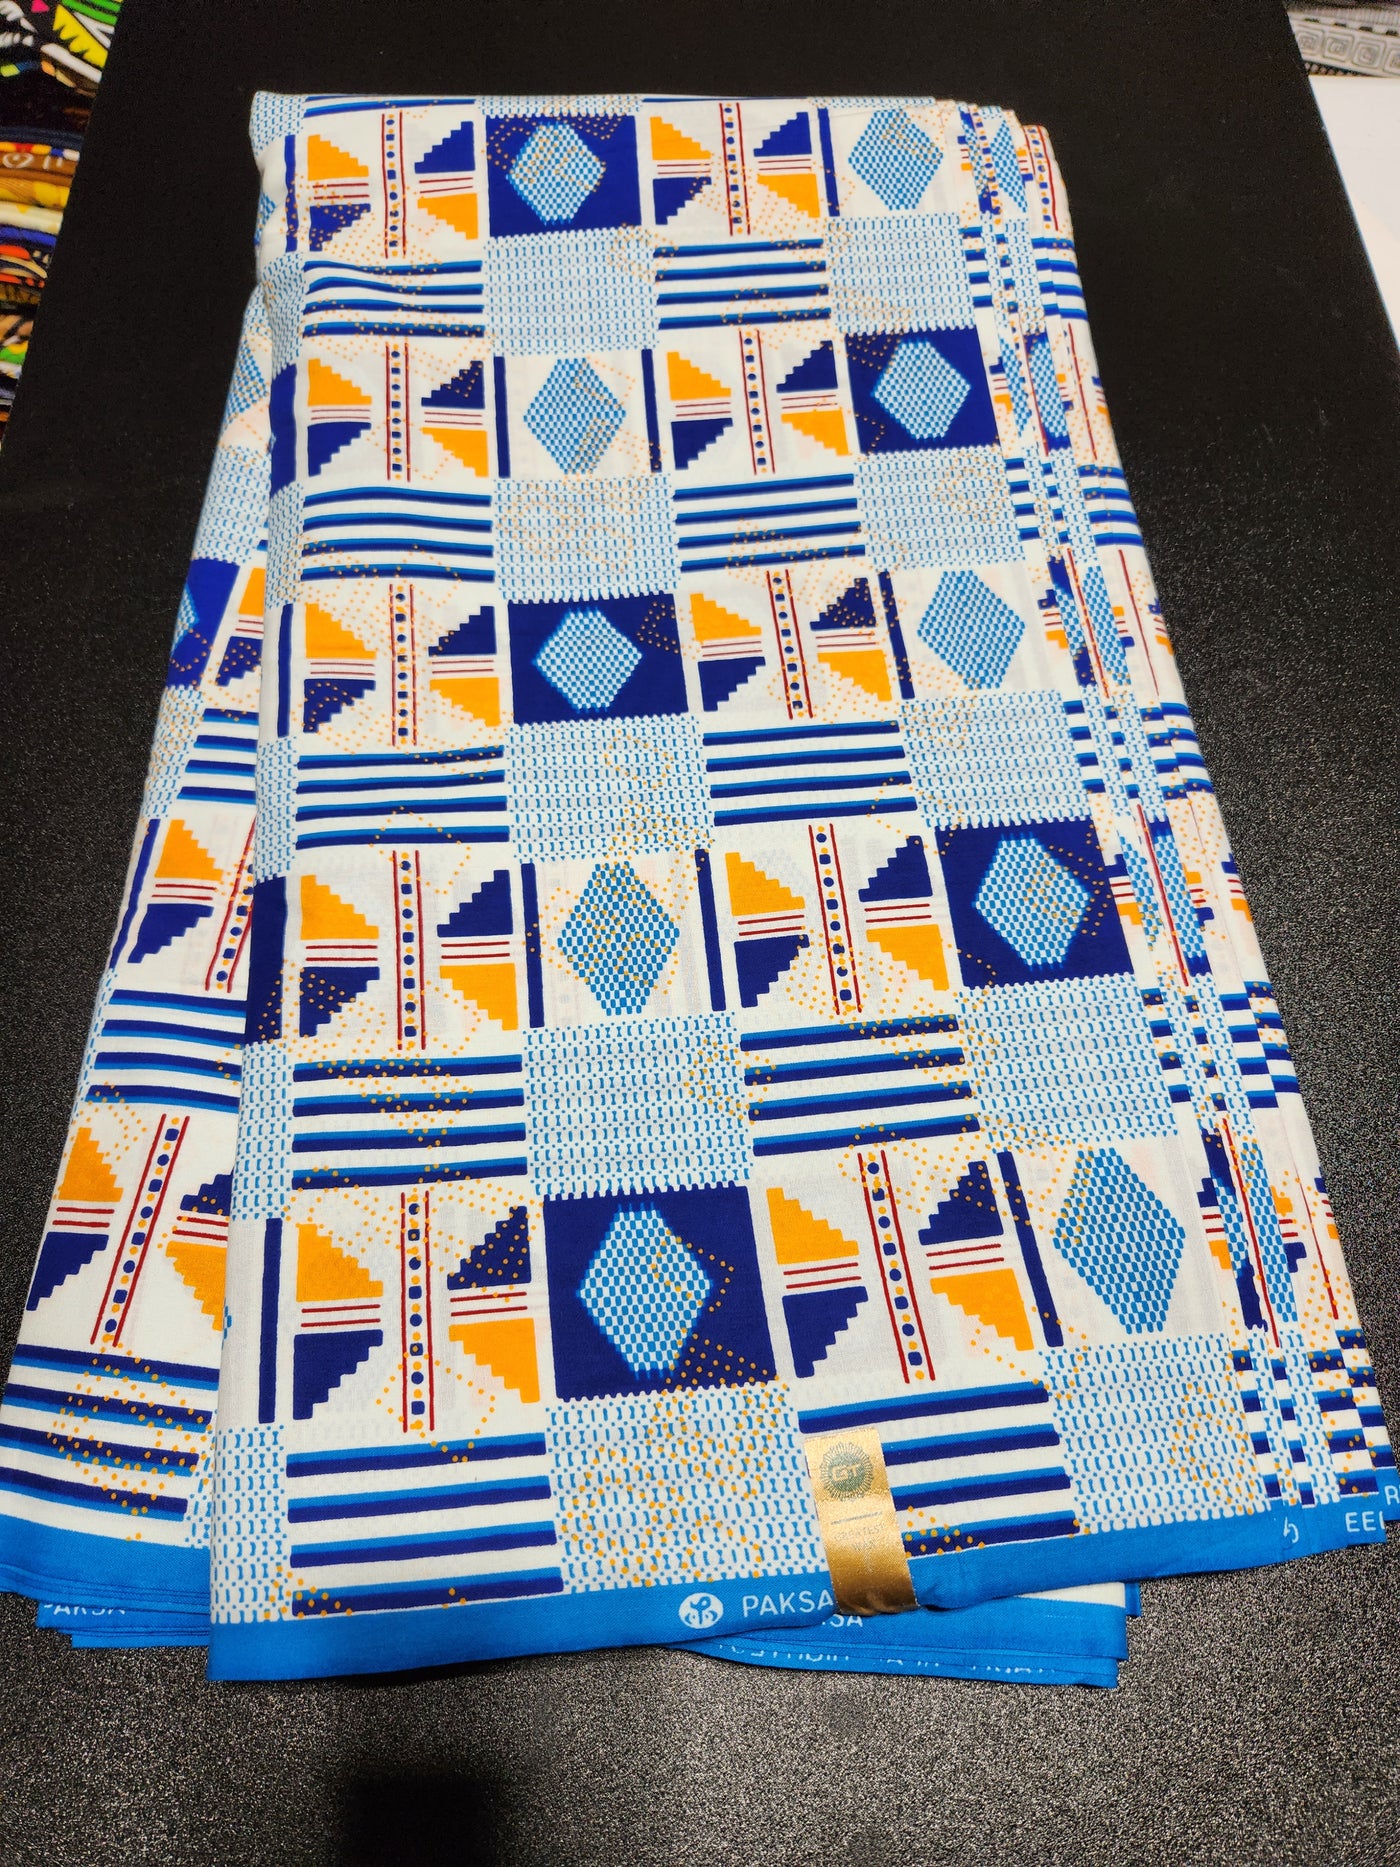 Blue Ankara Print Fabric ACS2021